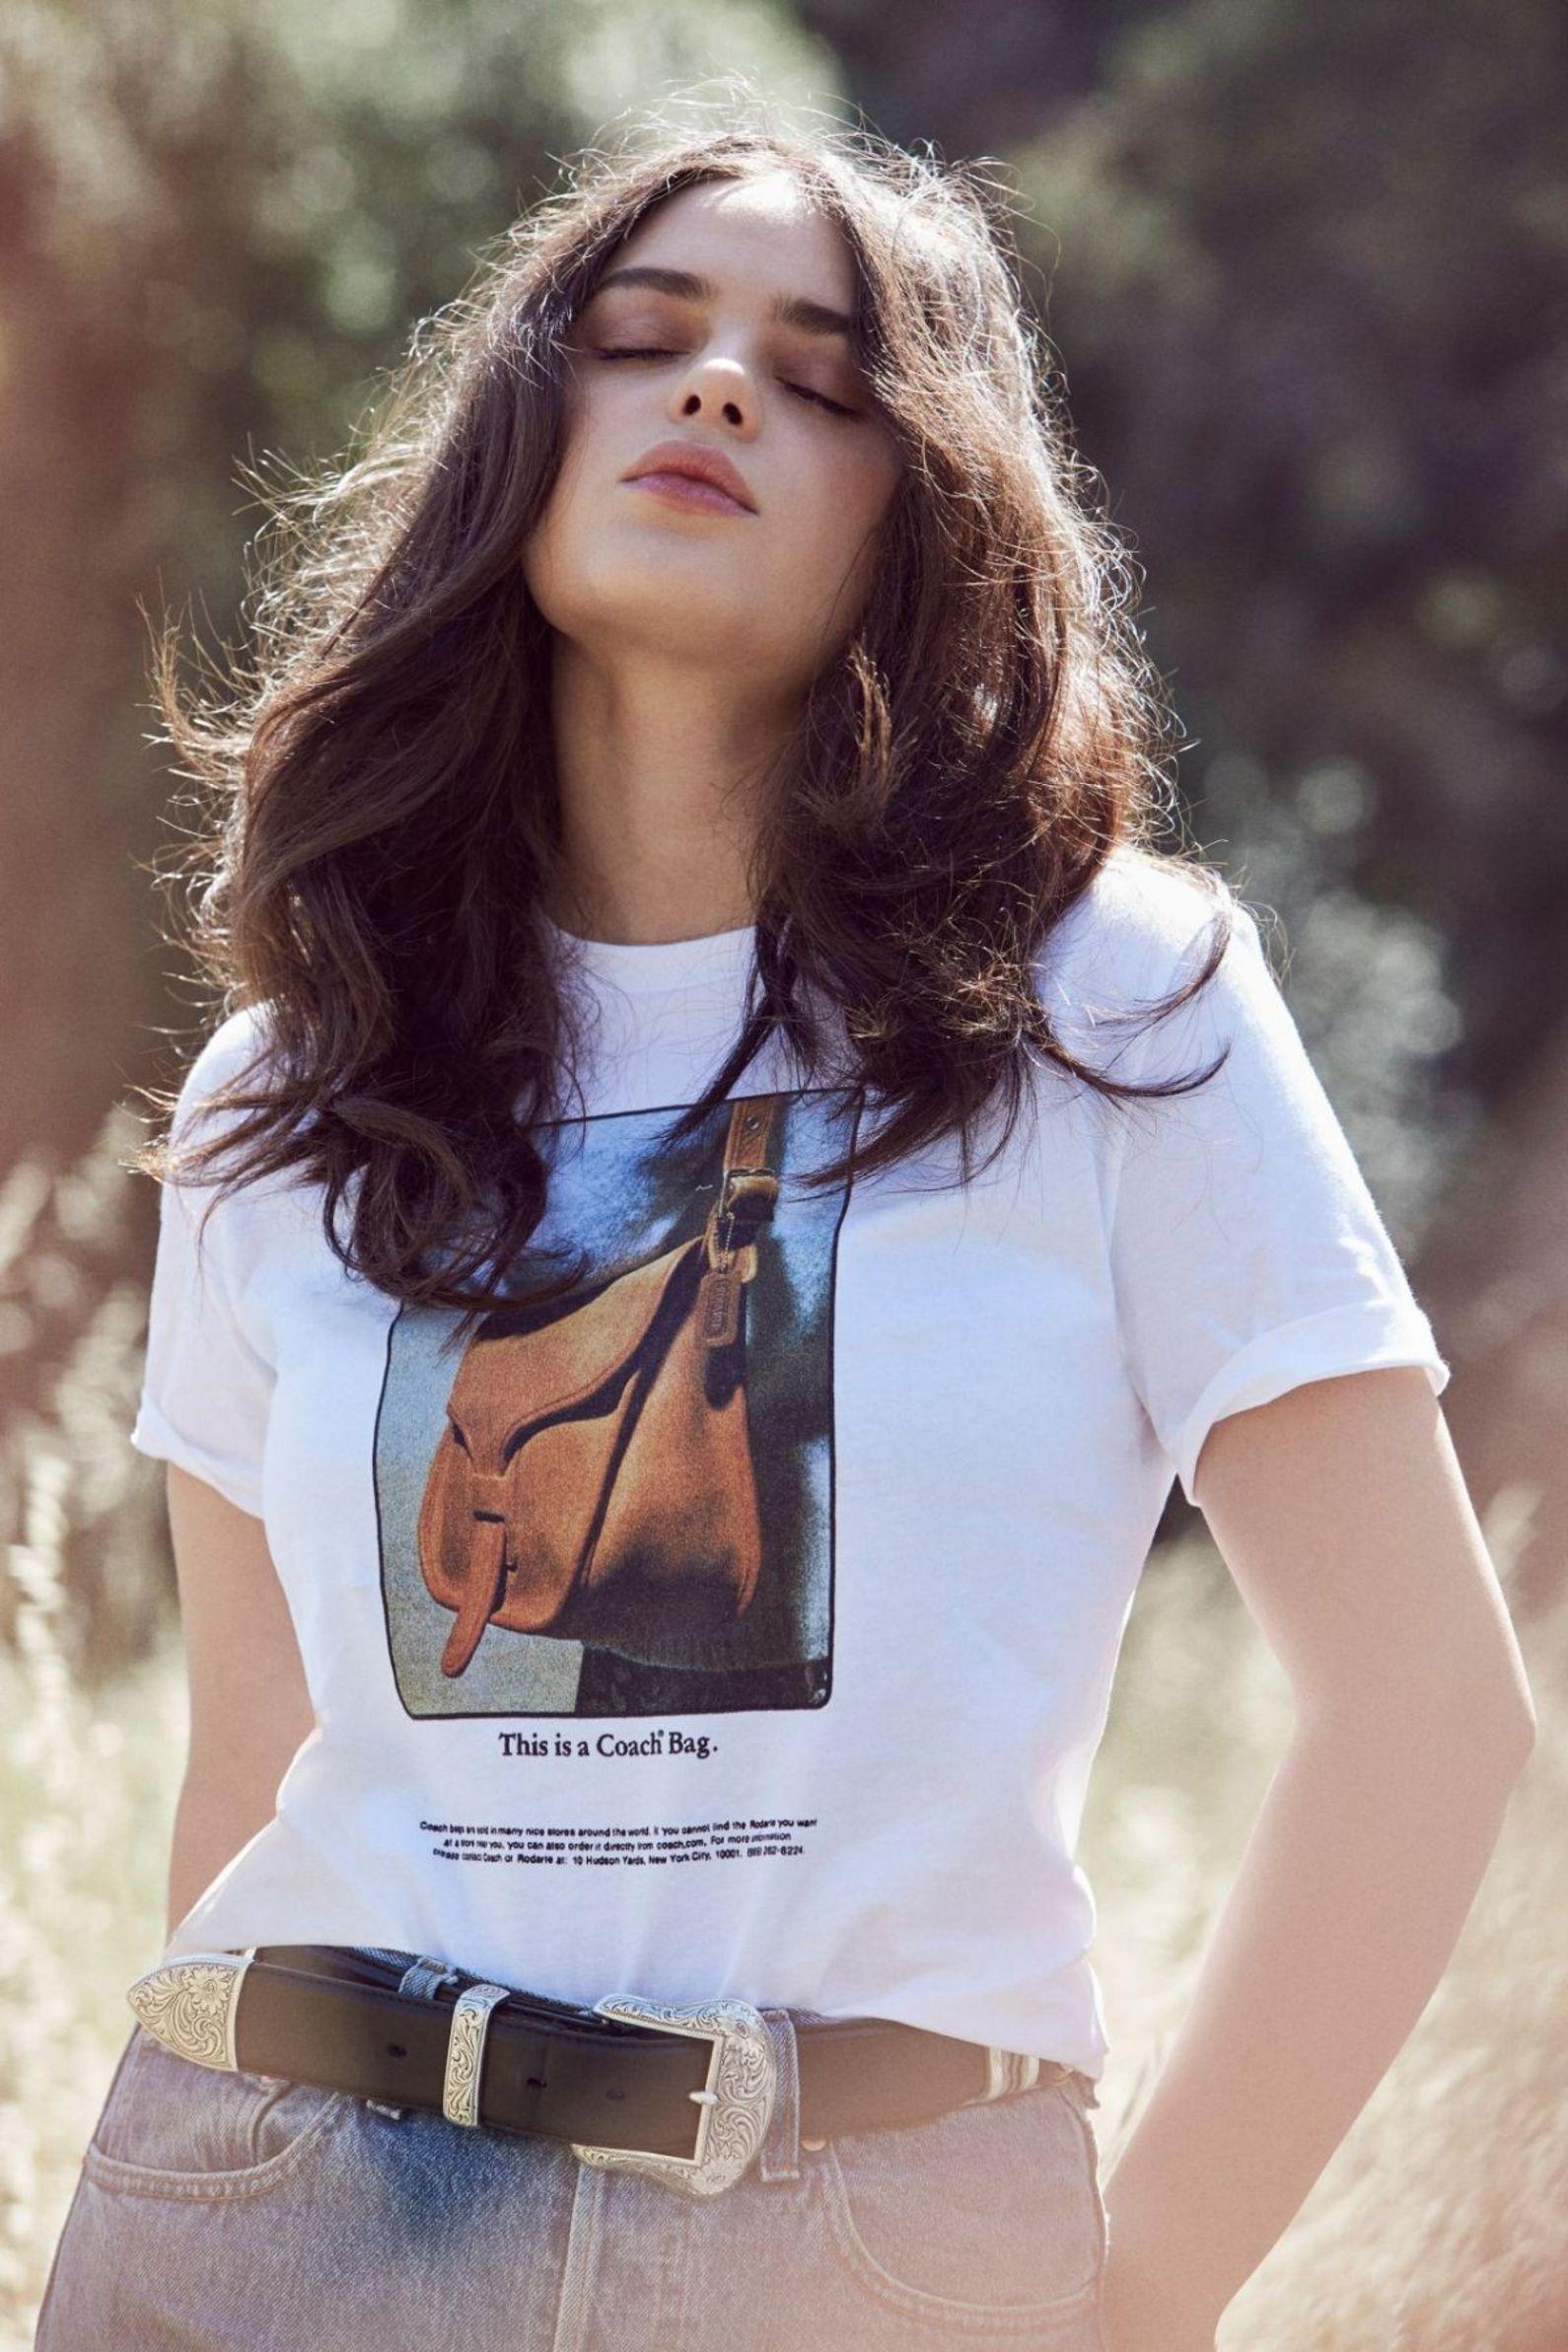 75+ Hot Pictures Of Odeya Rush – Goosebumps Actress – Israeli Beauty | Best Of Comic Books